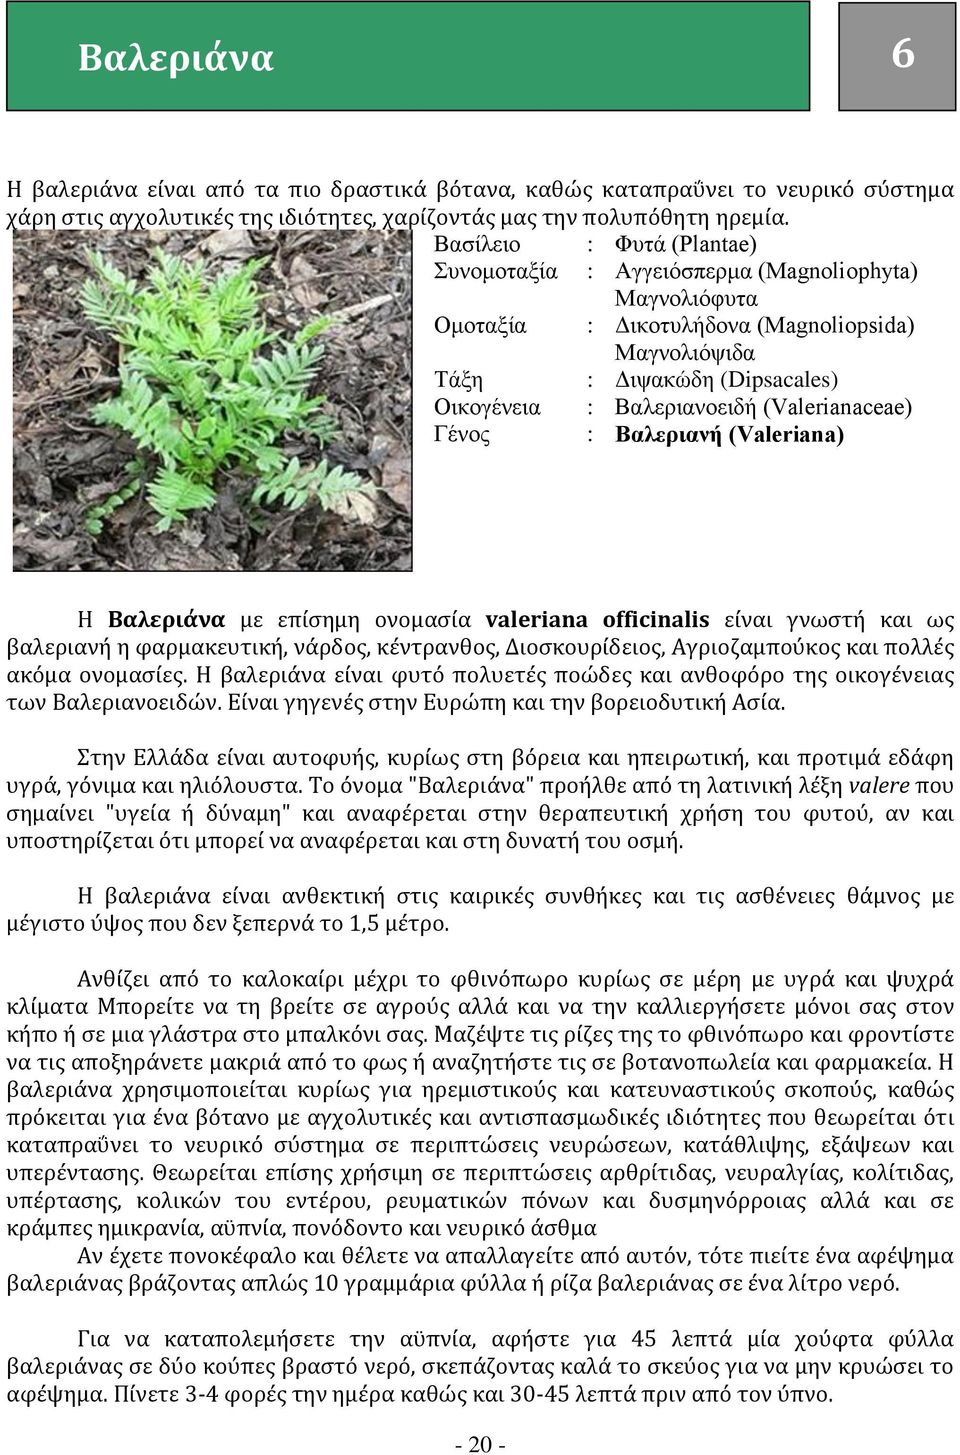 (Valerianaceae) Γένος : Βαλεριανή (Valeriana) Η Βαλεριάνα με επίσημη ονομασία valeriana officinalis είναι γνωστή και ως βαλεριανή η φαρμακευτική, νάρδος, κέντρανθος, Διοσκουρίδειος, Αγριοζαμπούκος